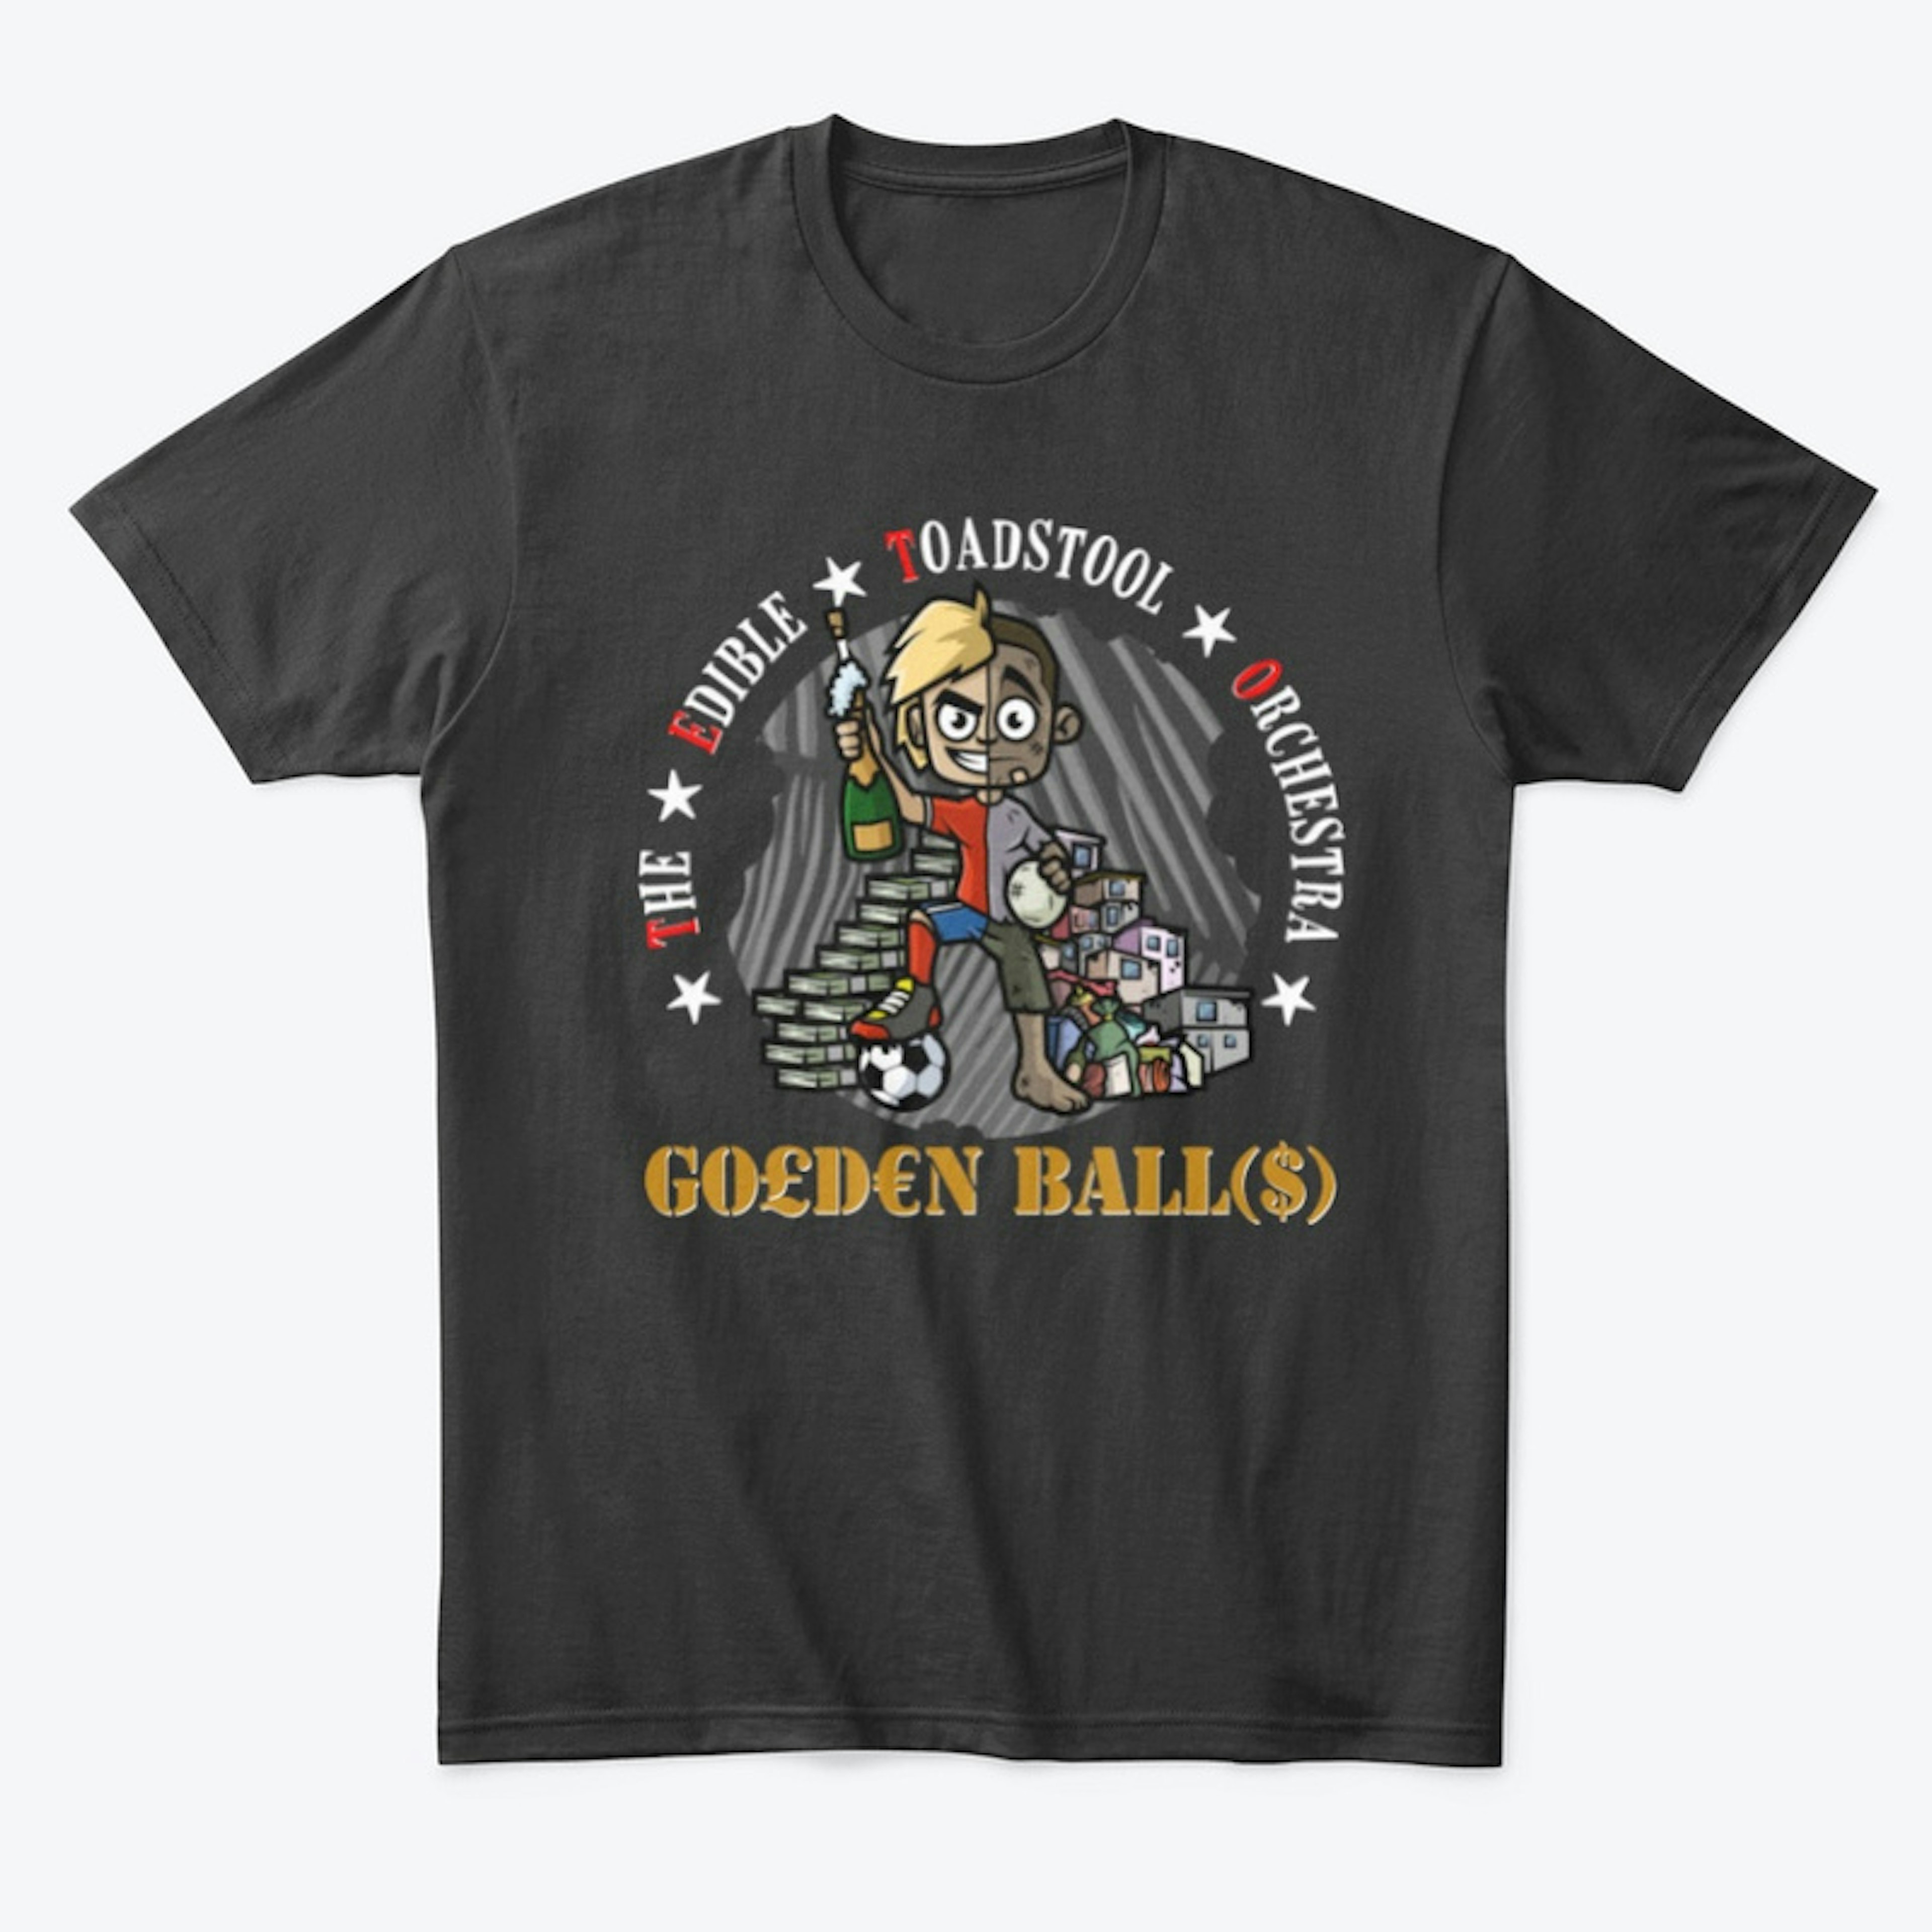 GO£D€N BALL($) - Man Shirt